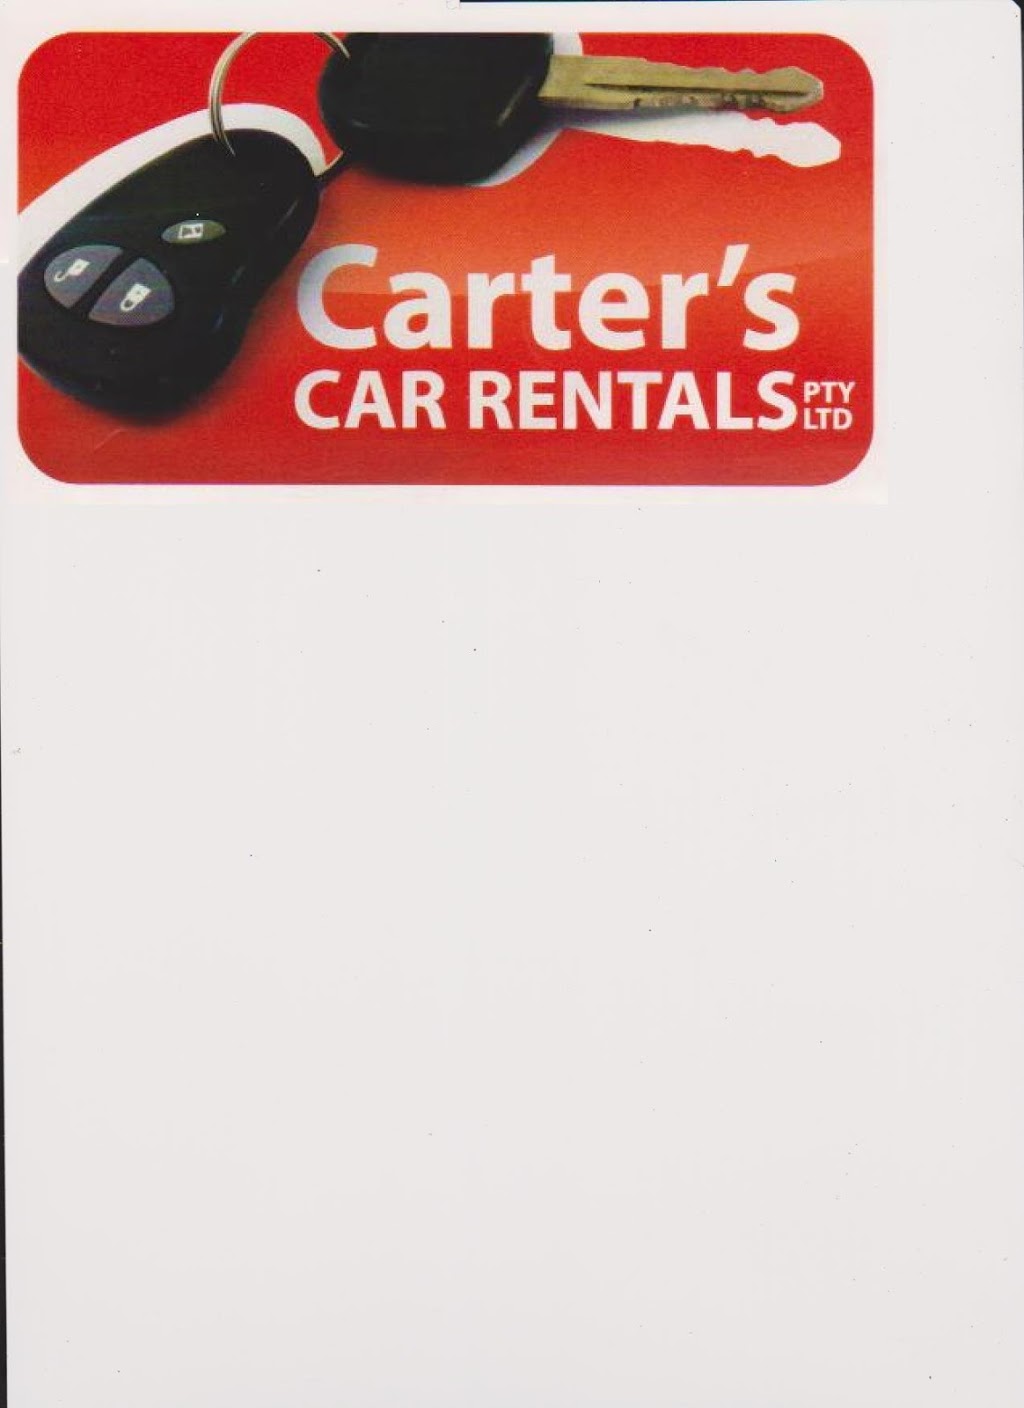 Carters Car Rentals | car rental | 10/63 Ourimbah Rd, Tweed Heads NSW 2485, Australia | 0755362806 OR +61 7 5536 2806